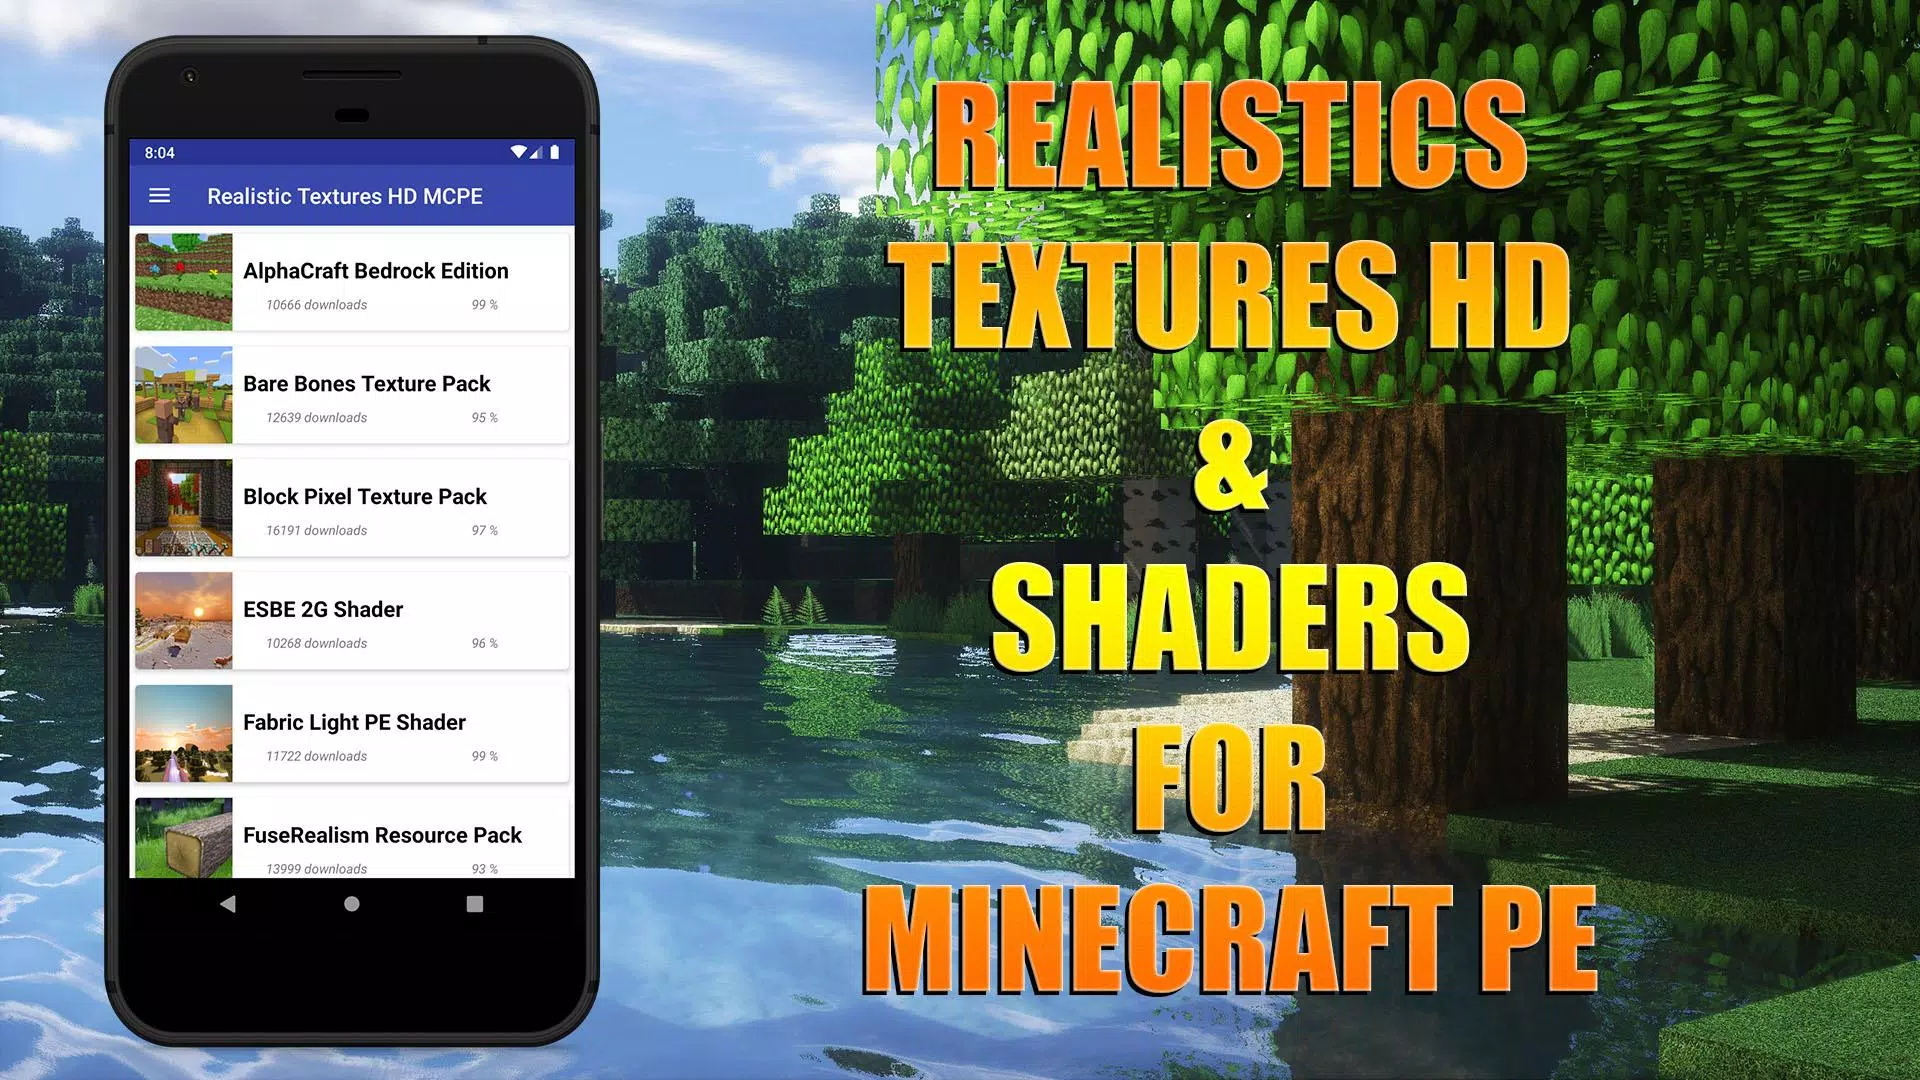 Arcade Font Minecraft Texture Pack